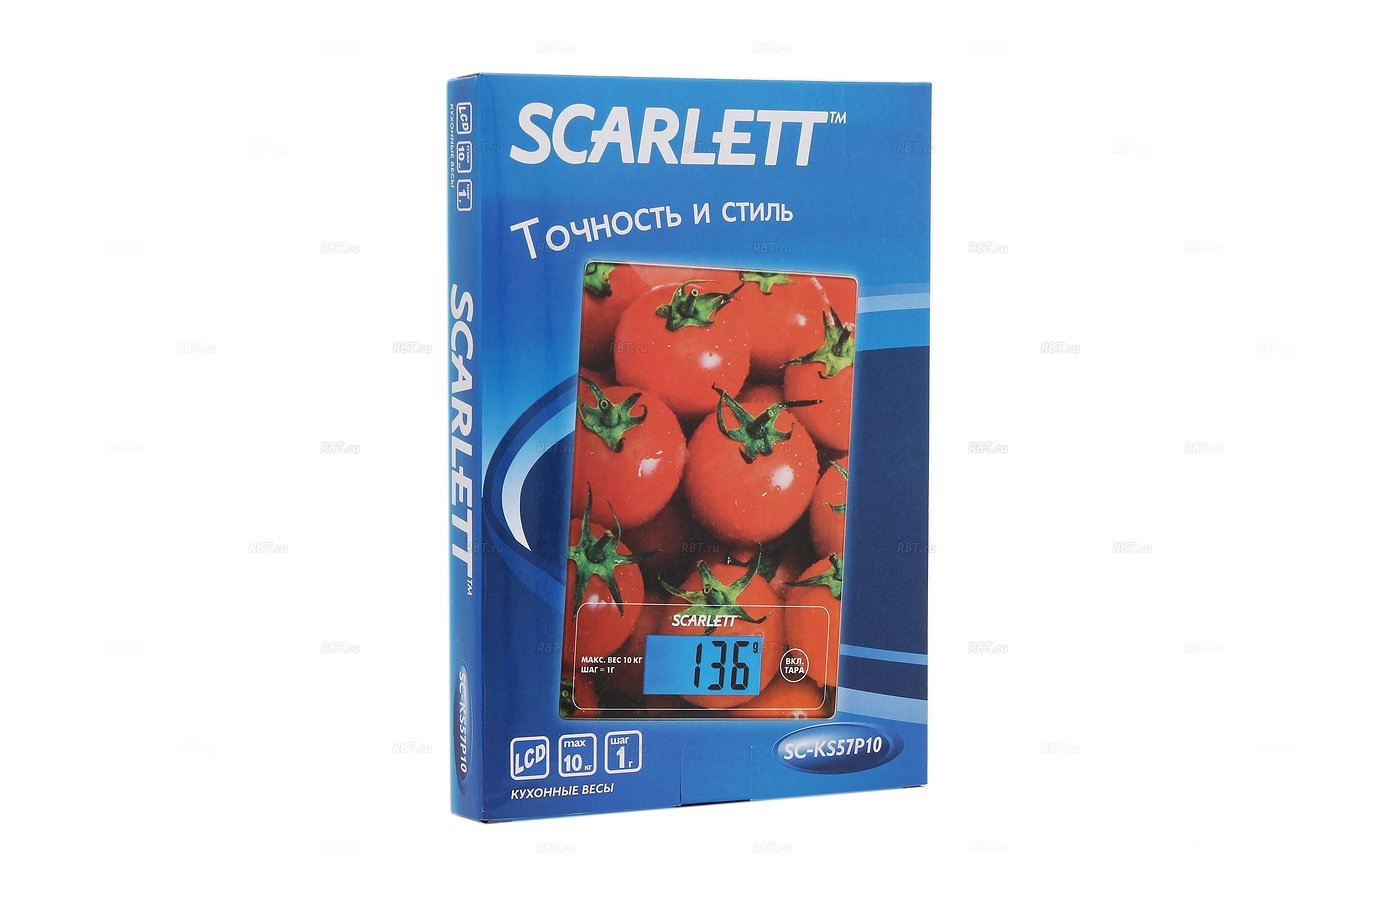 Cintar p/u bucatarie Scarlett SC-KS57P10, 10 kg, Rosu